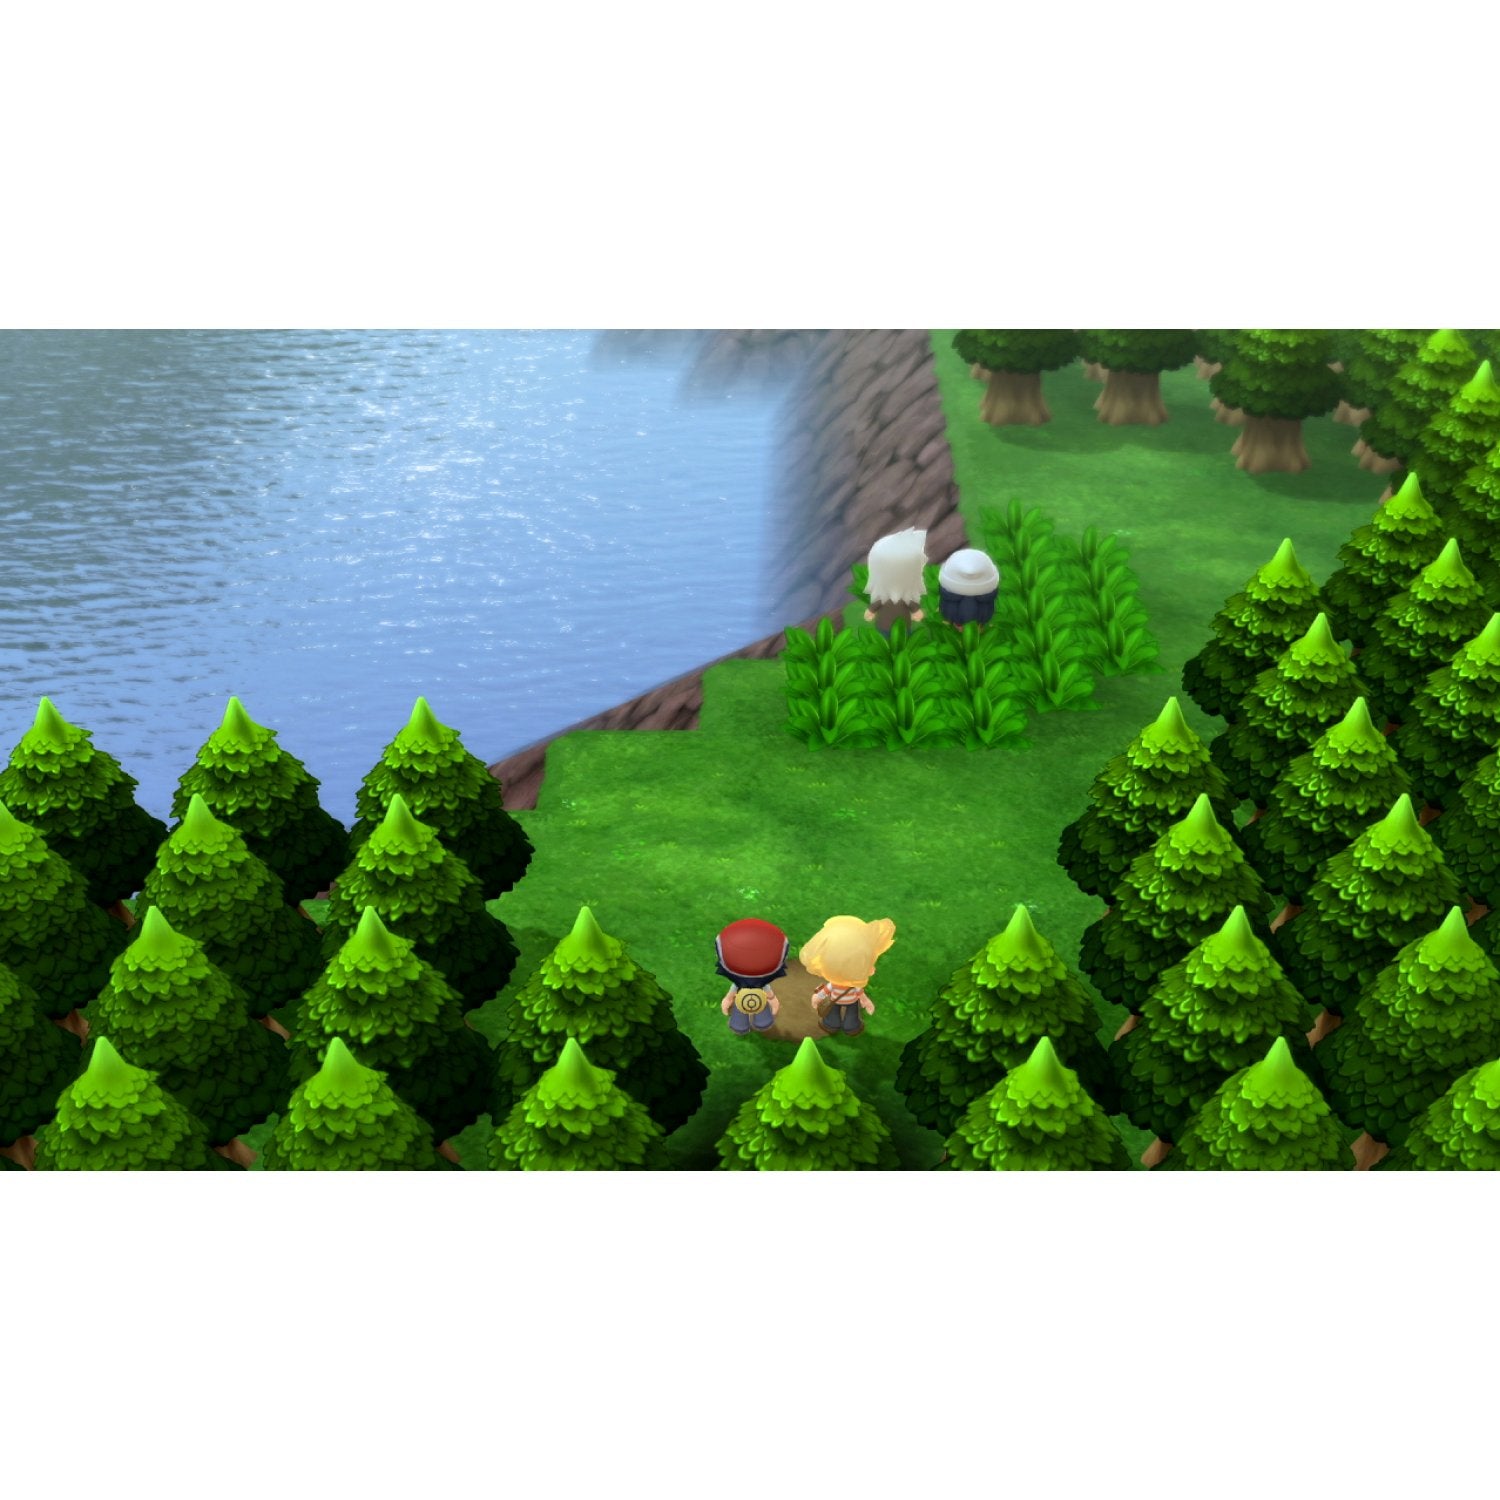 Pokemon Brilliant Diamond and Shining Pearl update 1.1.0